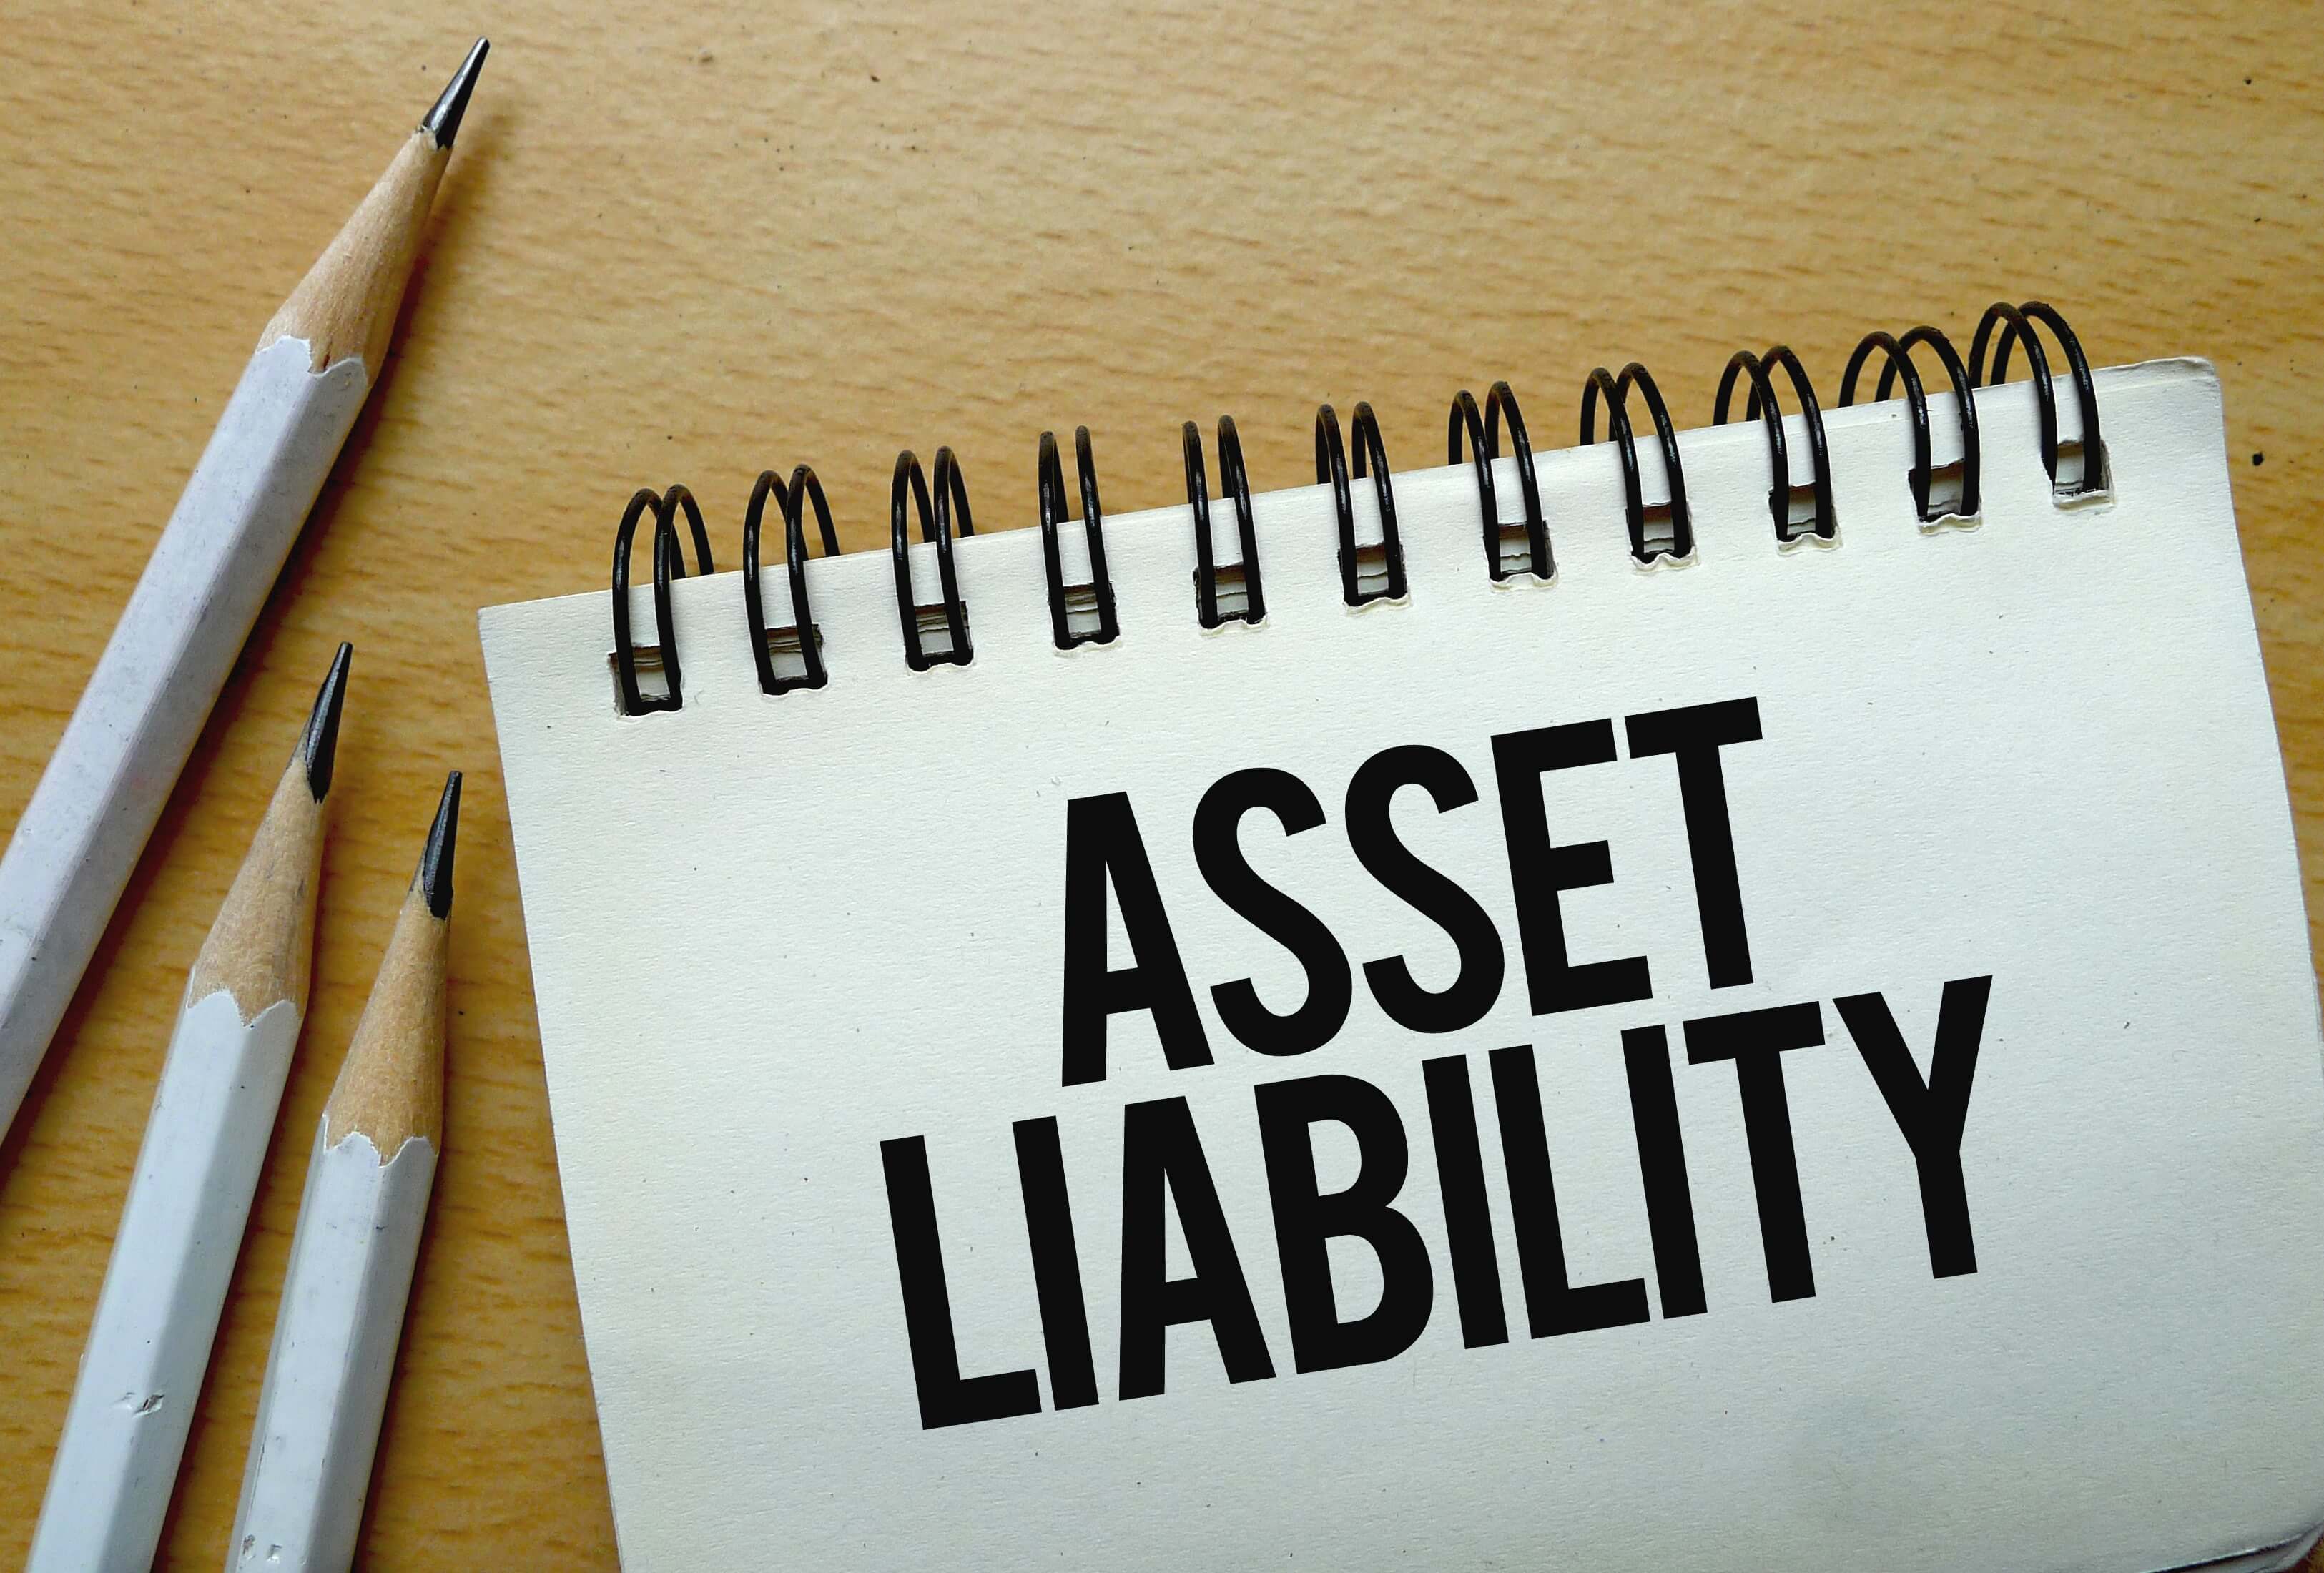 Asset liability decreases your net worth